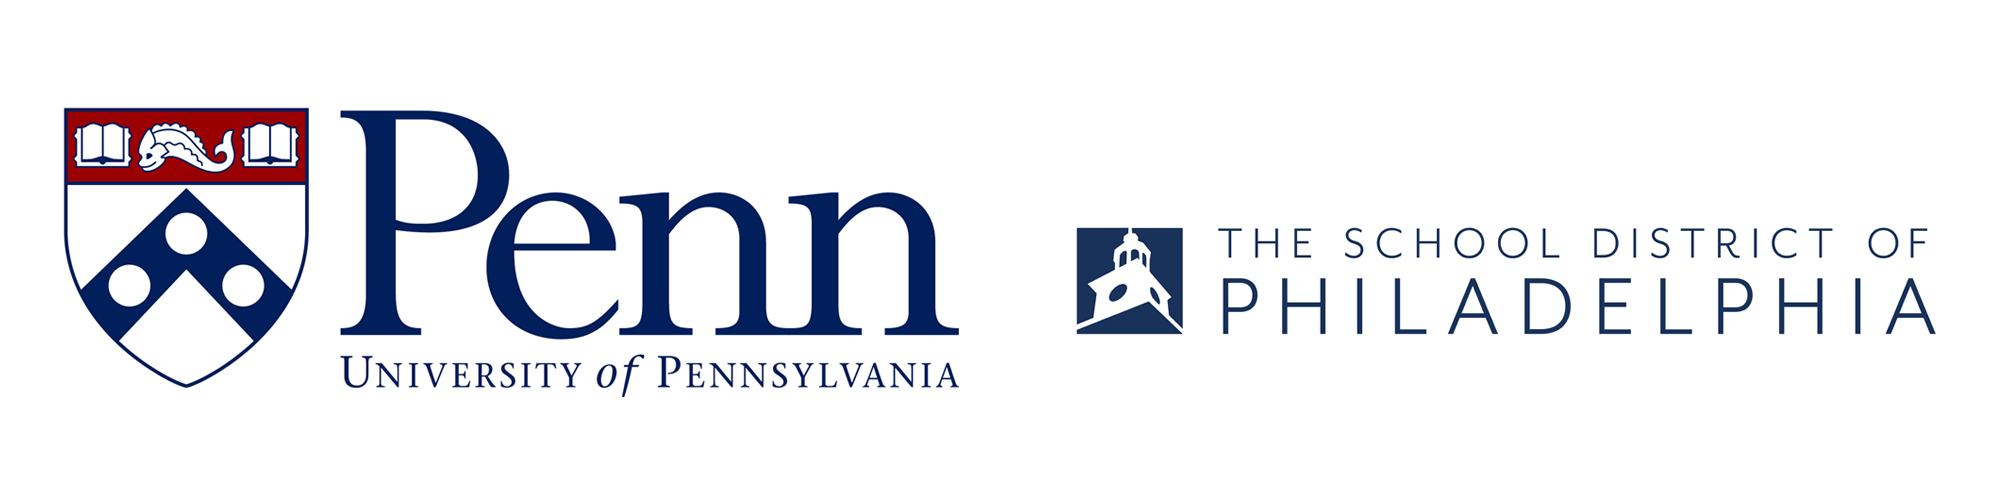 Penn and Philadelphia School District logos side by side.